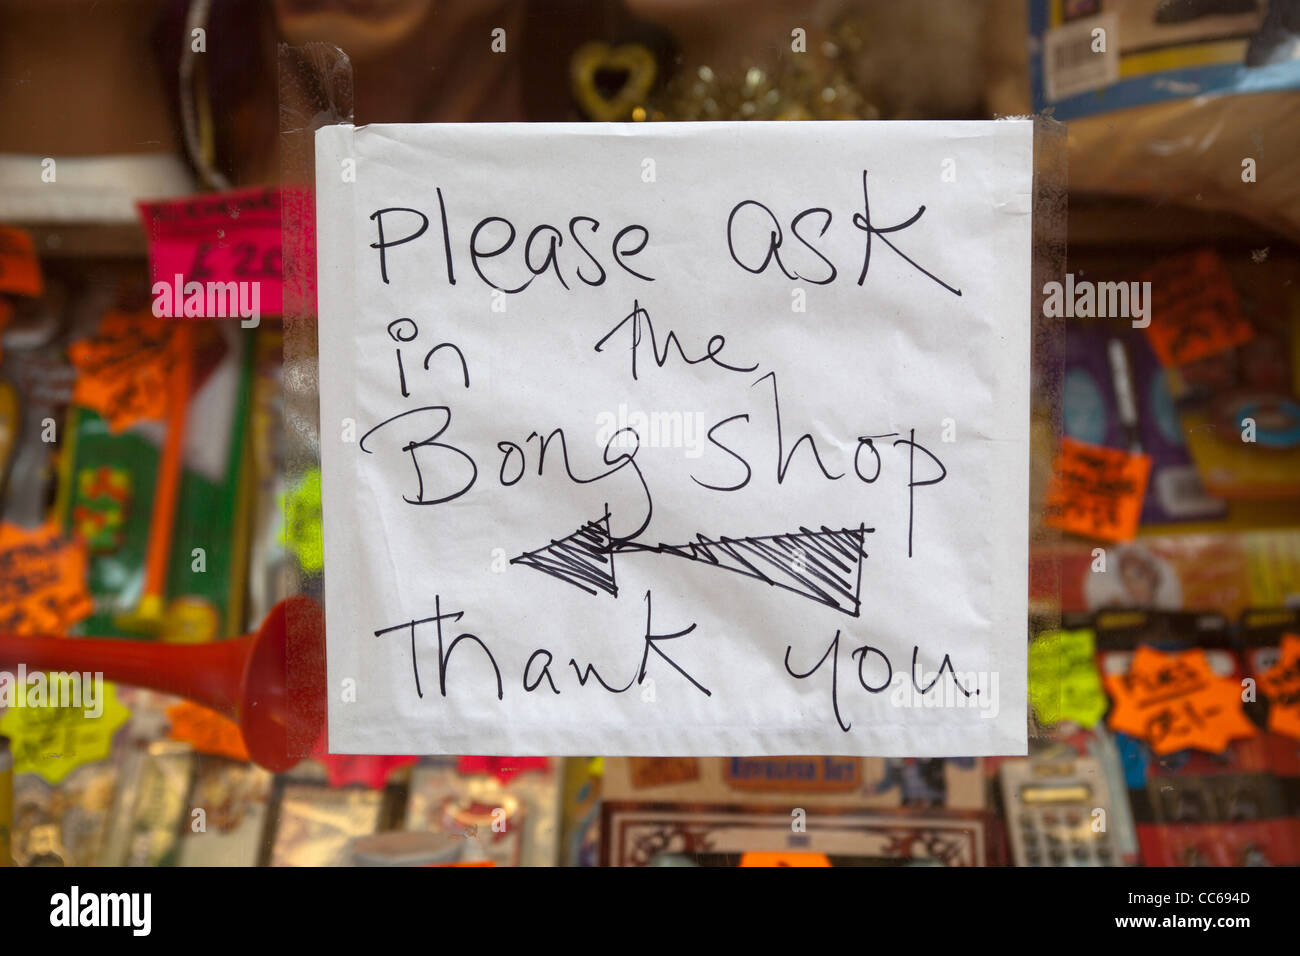 Please Knock at The Bong Shop' Next Door Shop Sign Stock Photo - Alamy